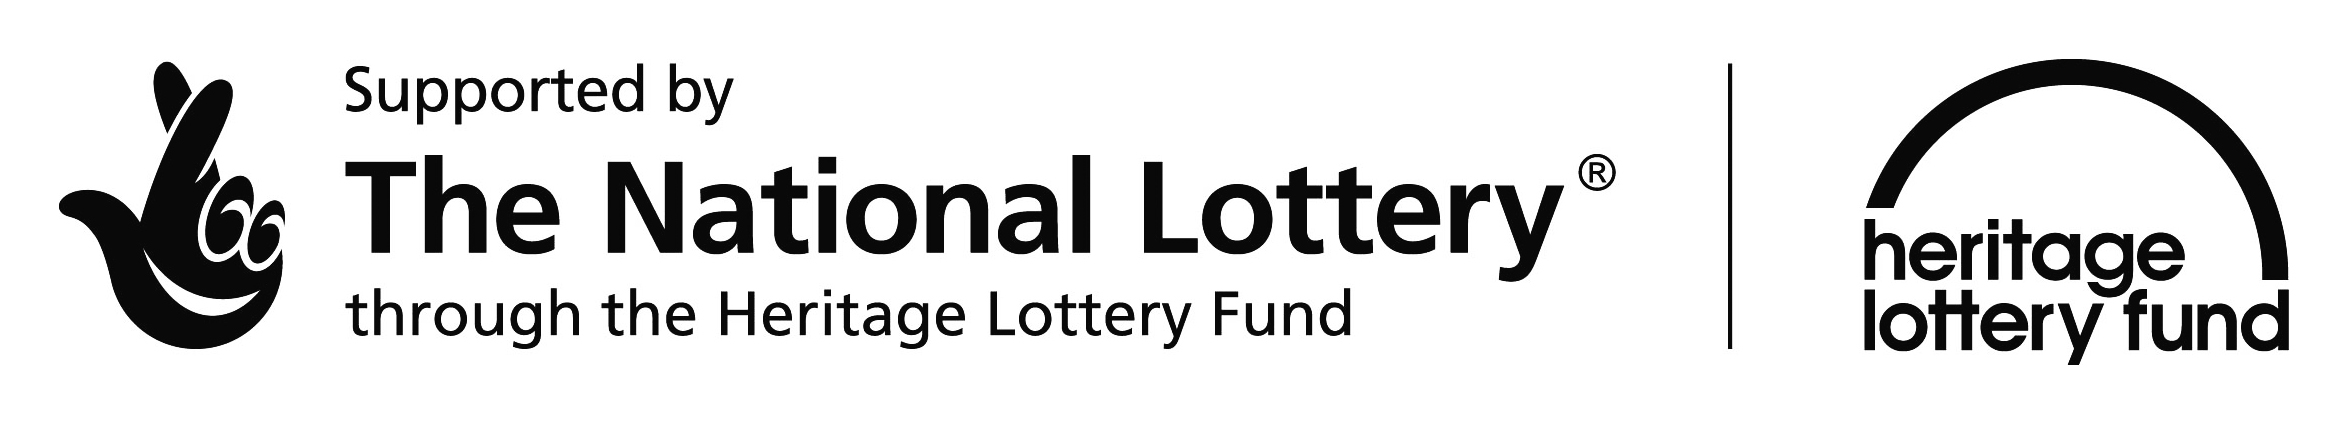 heritage lottery fund logo